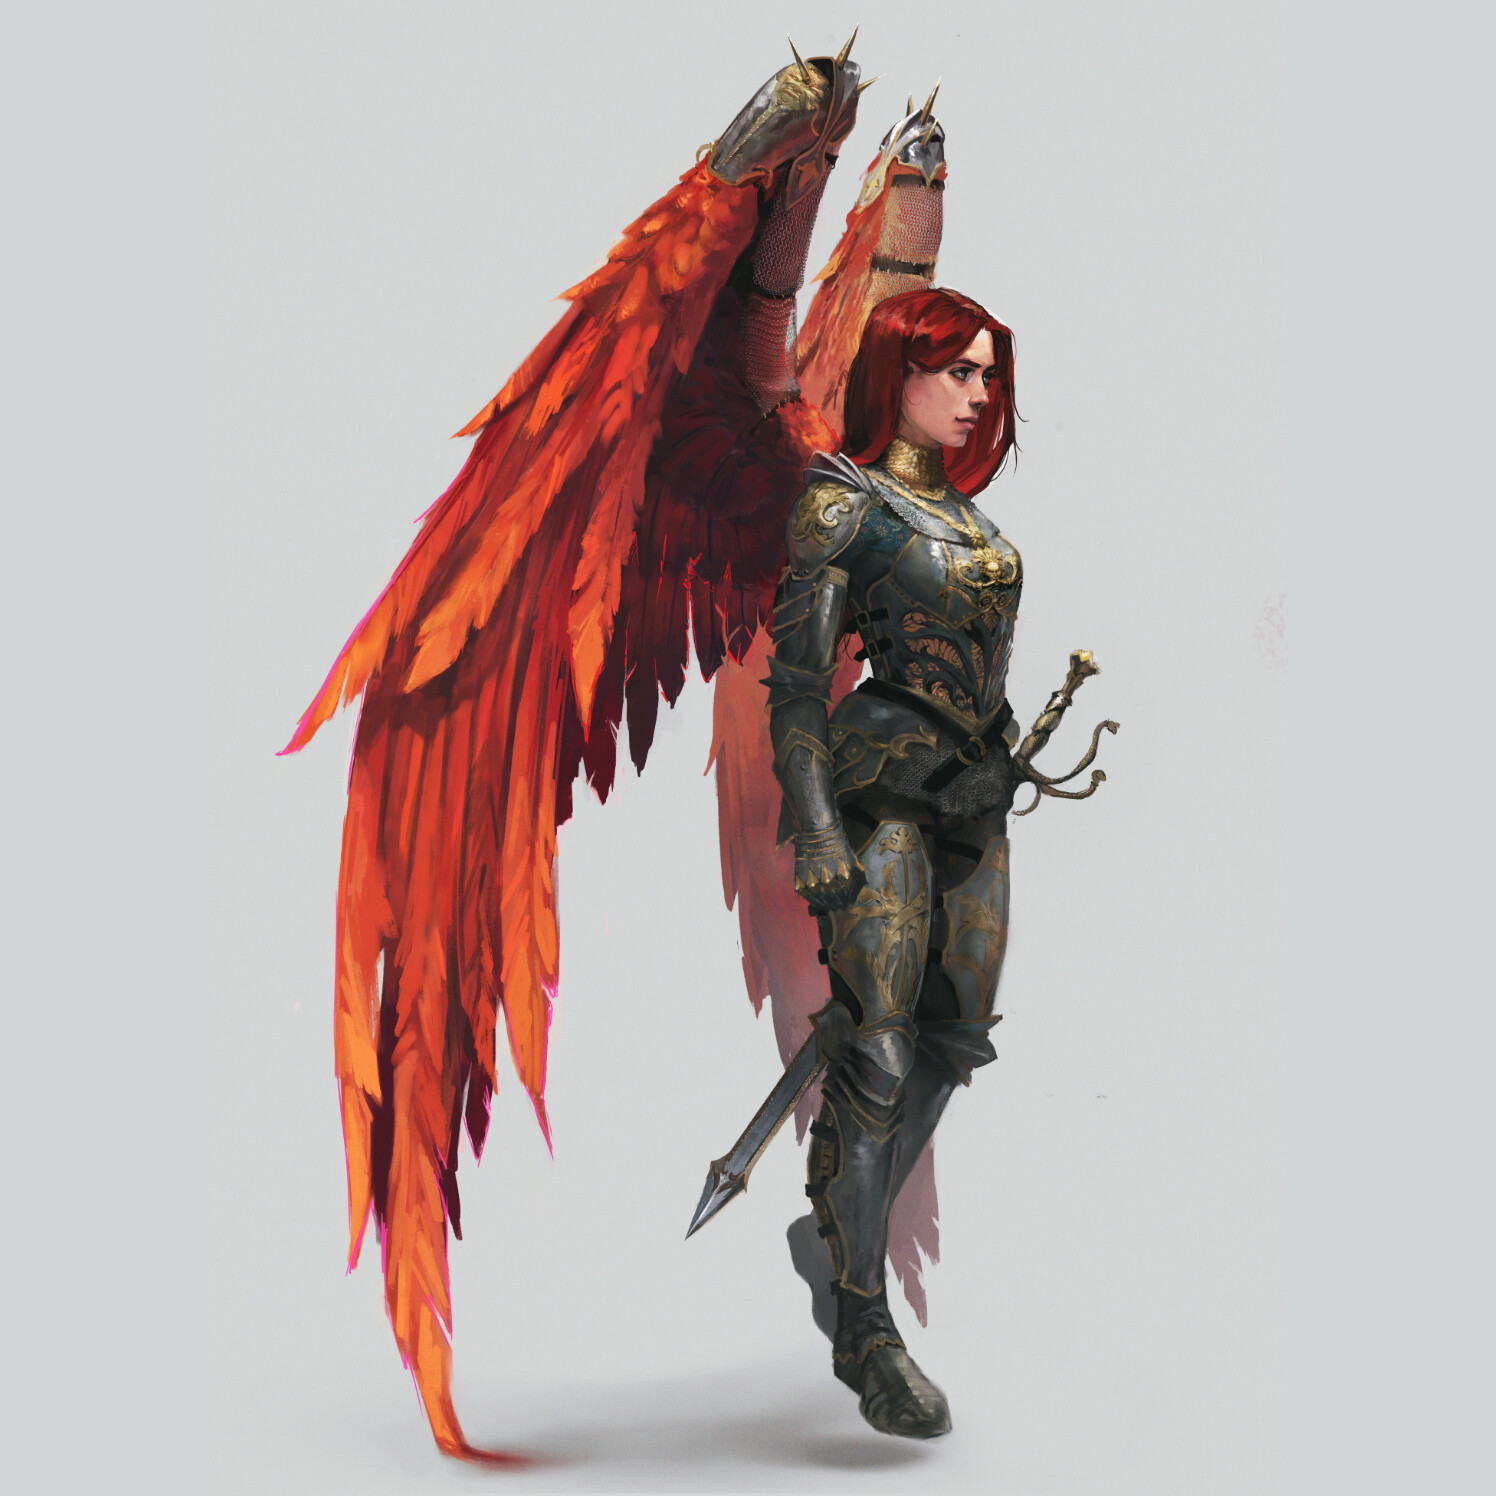 General 1496x1496 portrait display original characters wings armor sword redhead